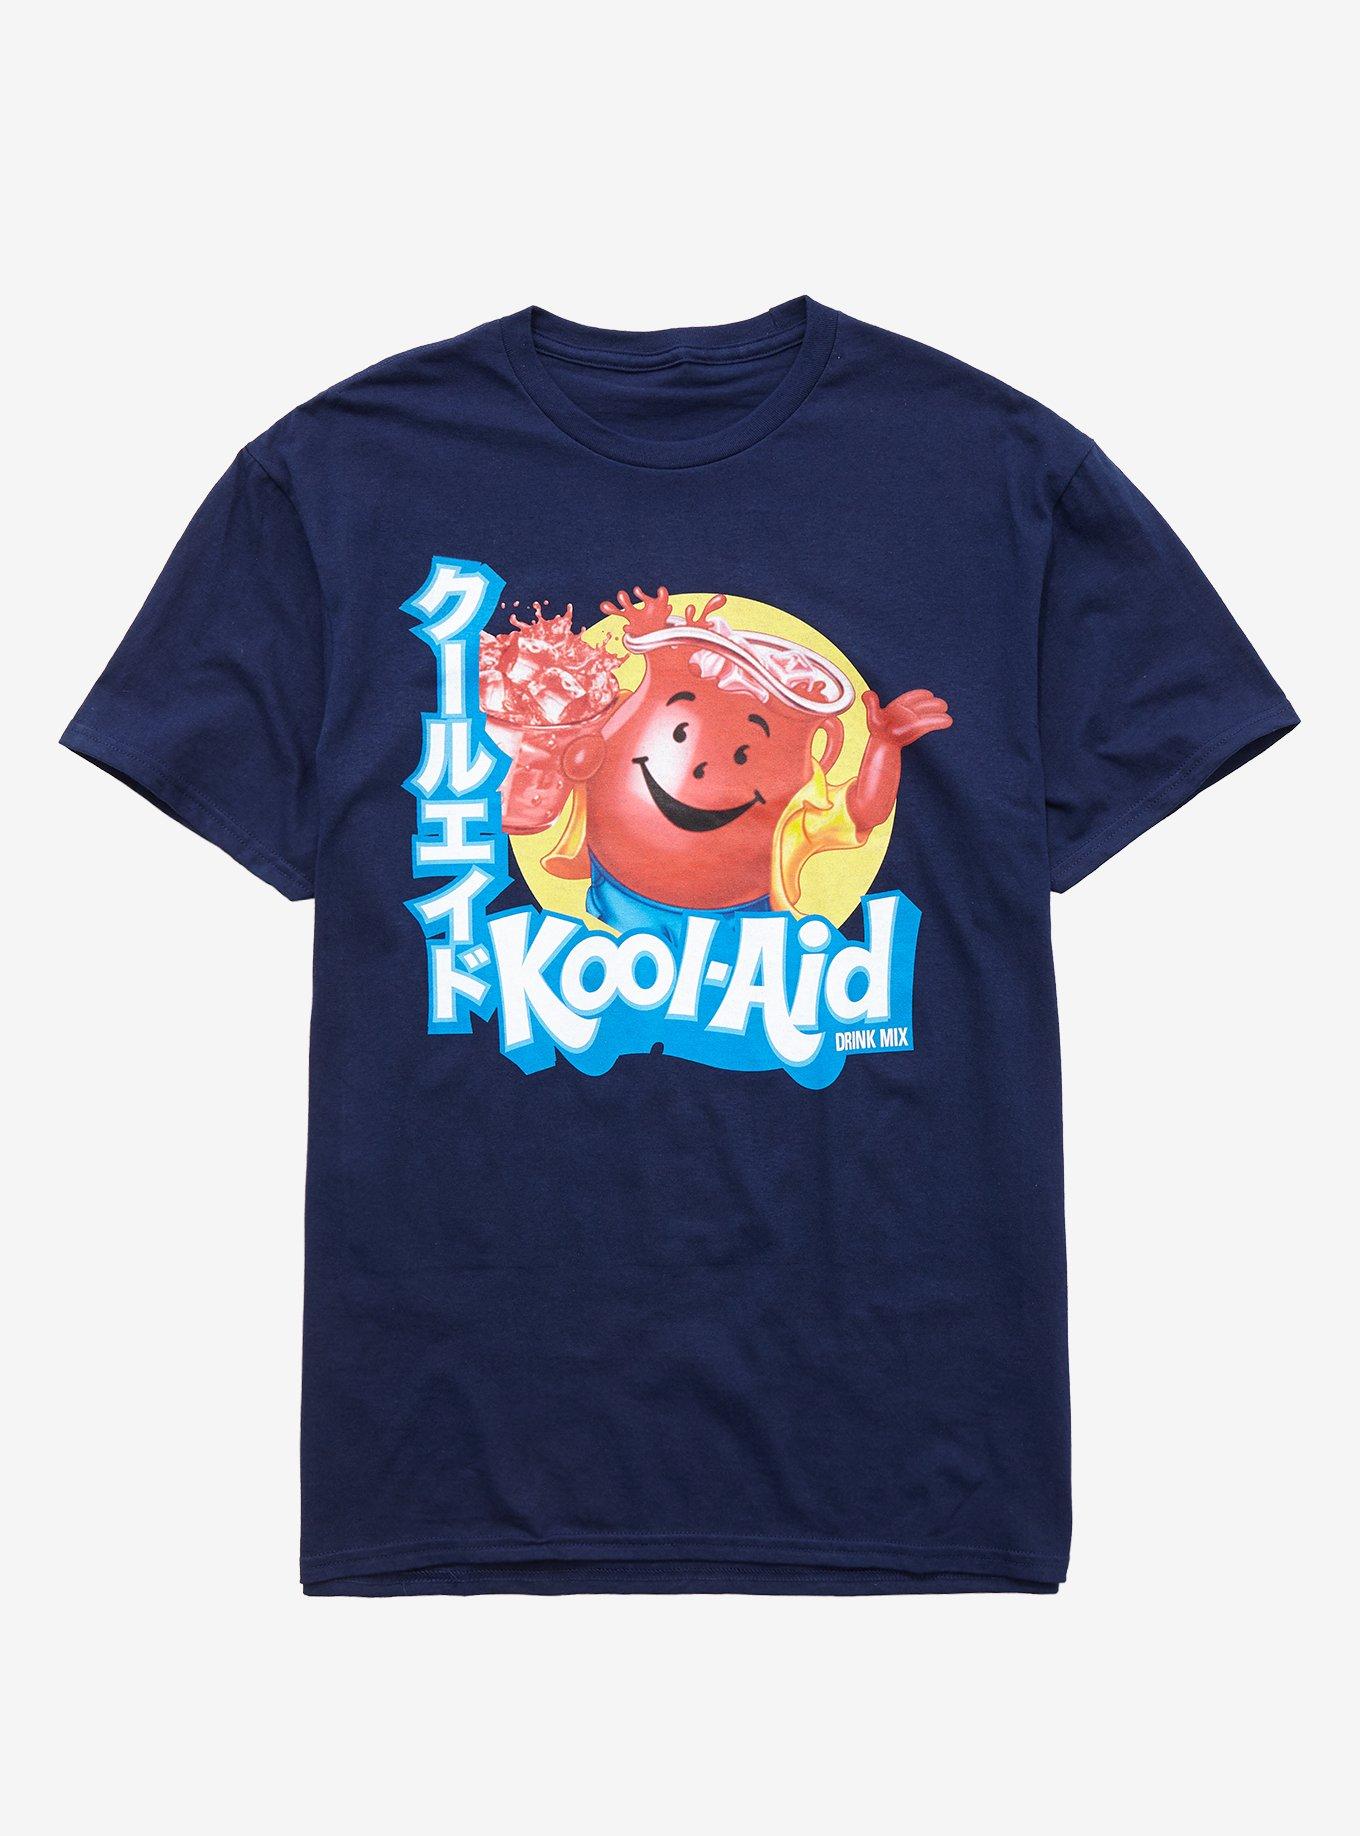 Kool-Aid International T-Shirt, NAVY, hi-res